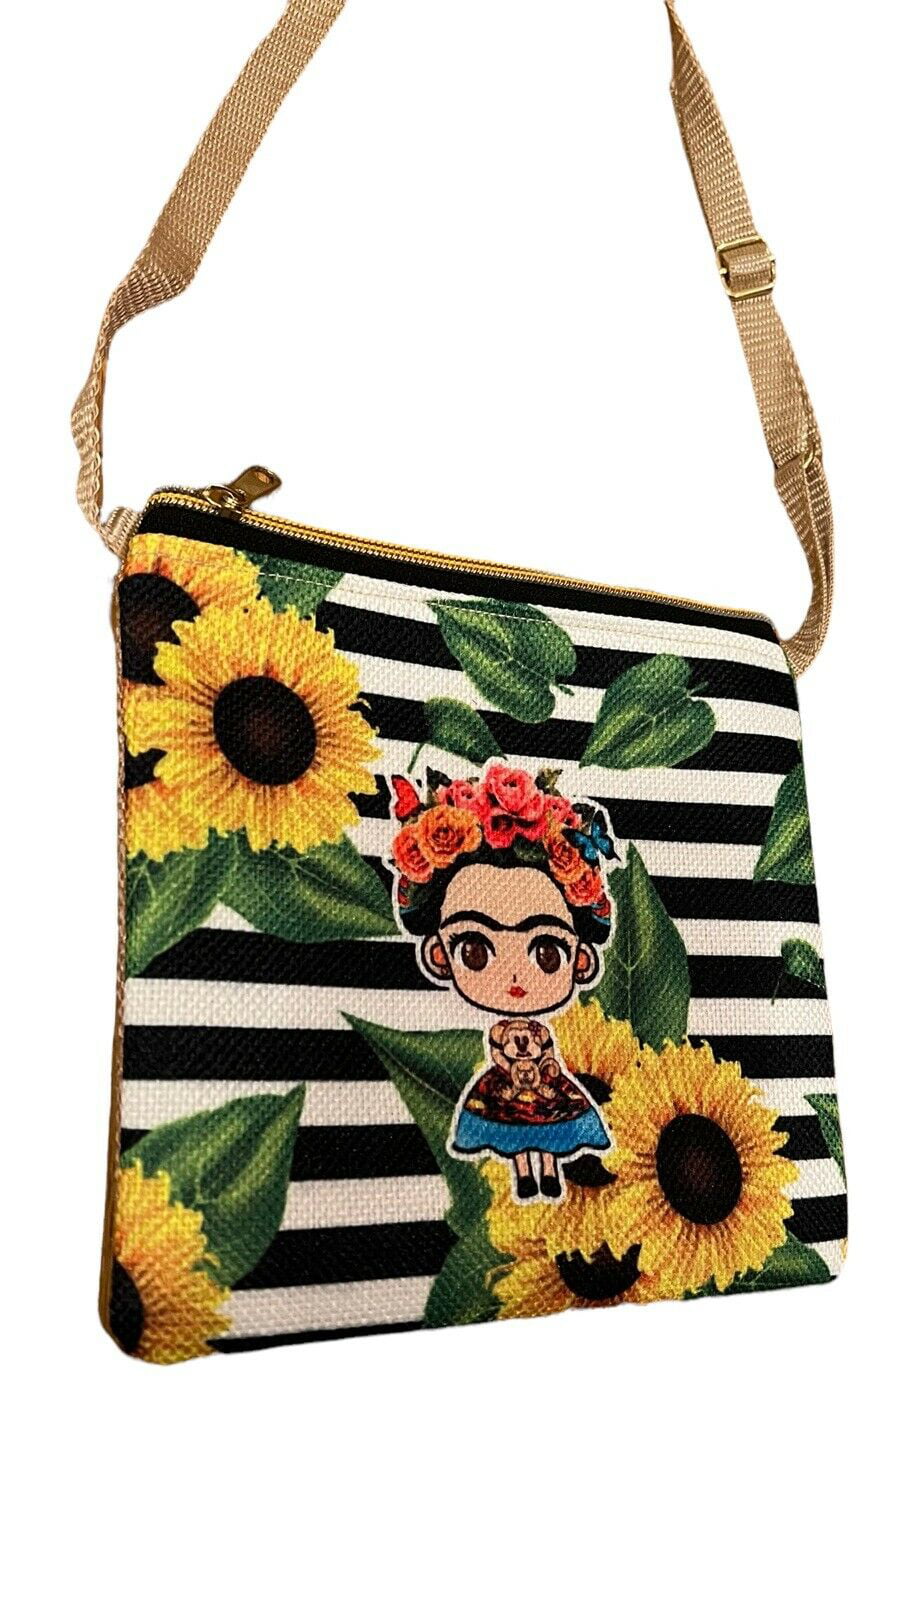 Chula Frida Kahlo purse. Comes with extra strap to... - Depop